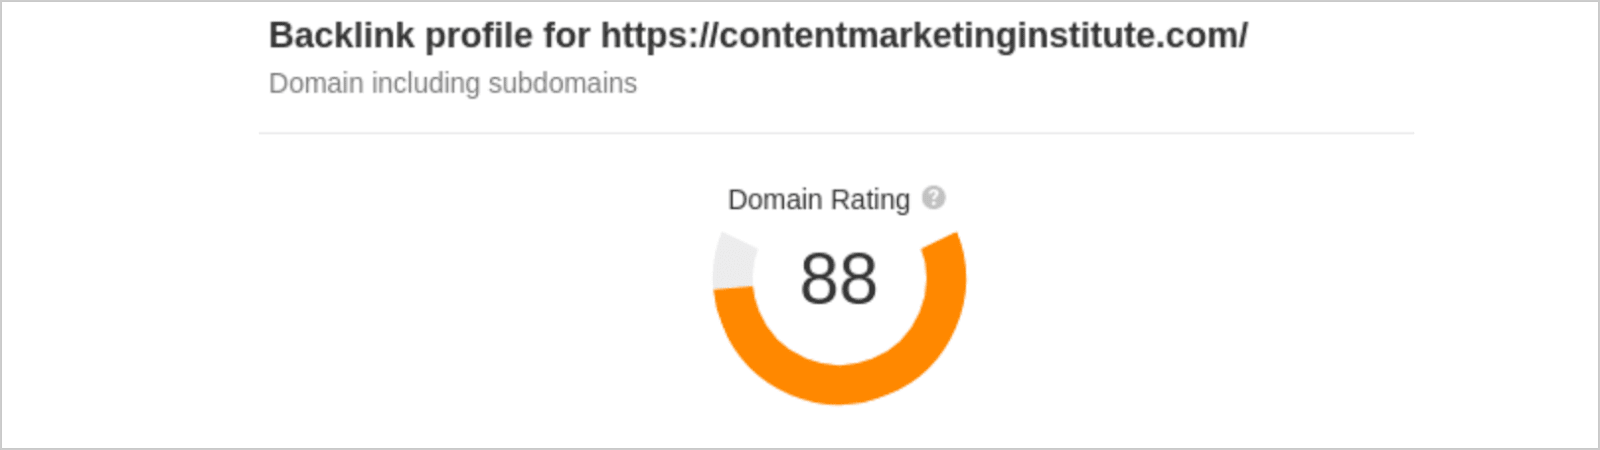 Domain rating